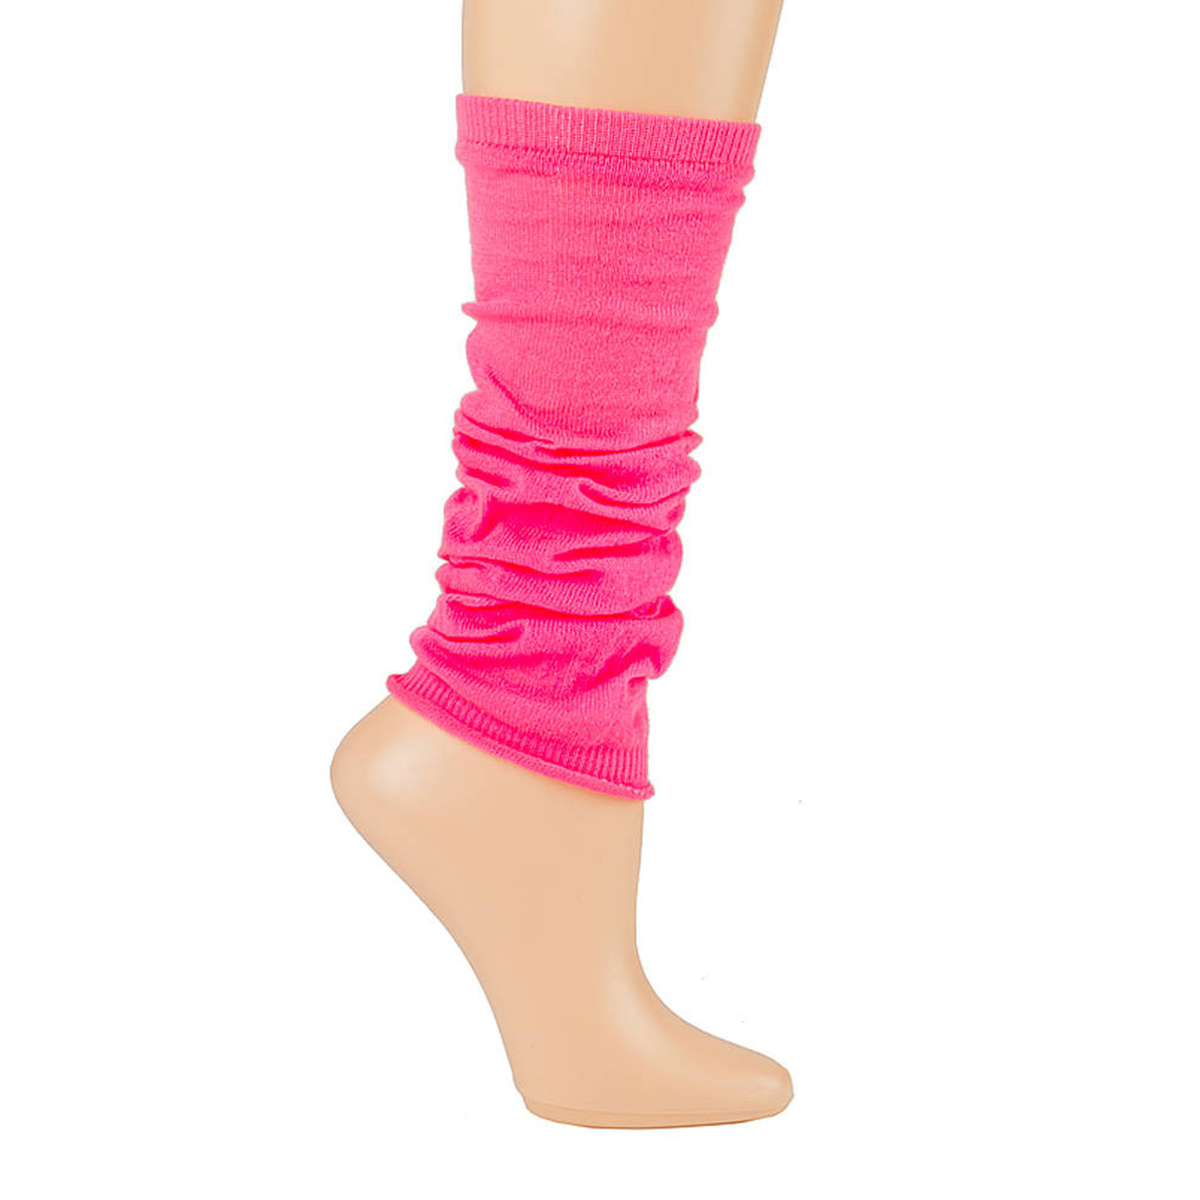 LADIES & GIRLS ANKLE LEG WARMERS FLUORESCENT NEON STRETCH FIT COMFORT TUTU FANCY DRESS ACCESSORY 